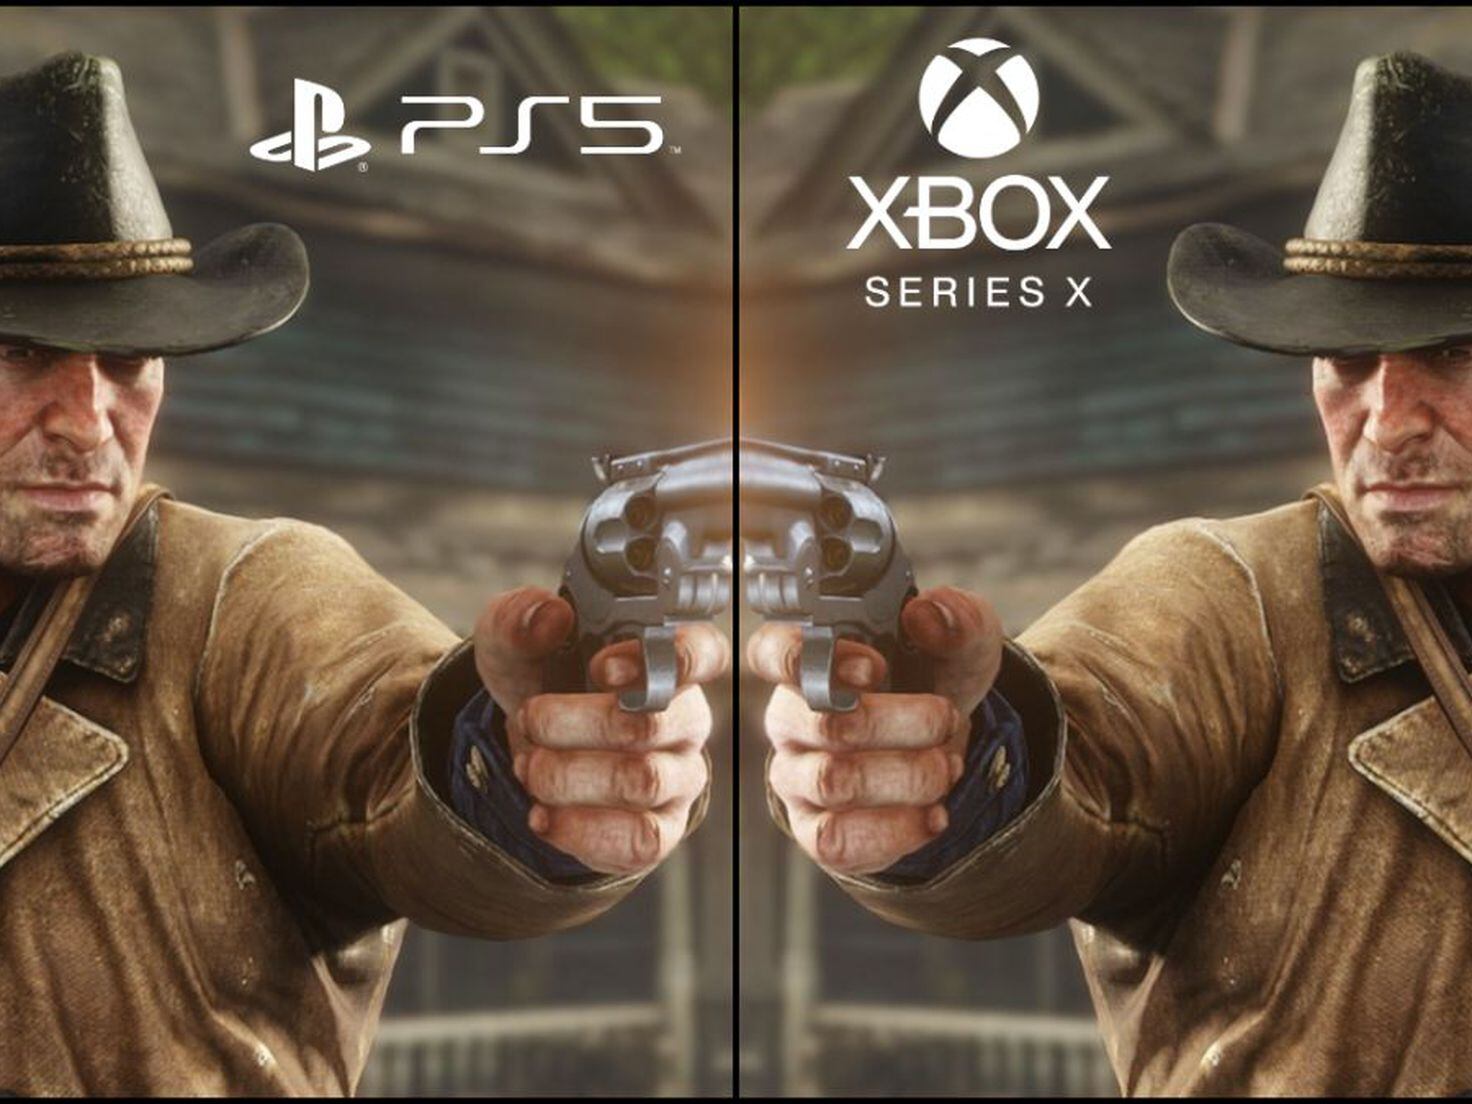 Anfibio neumático en caso Red Dead Redemption 2, comparativa gráfica PS5 vs Xbox Series X|S, ¿dónde  se ve mejor? - Meristation